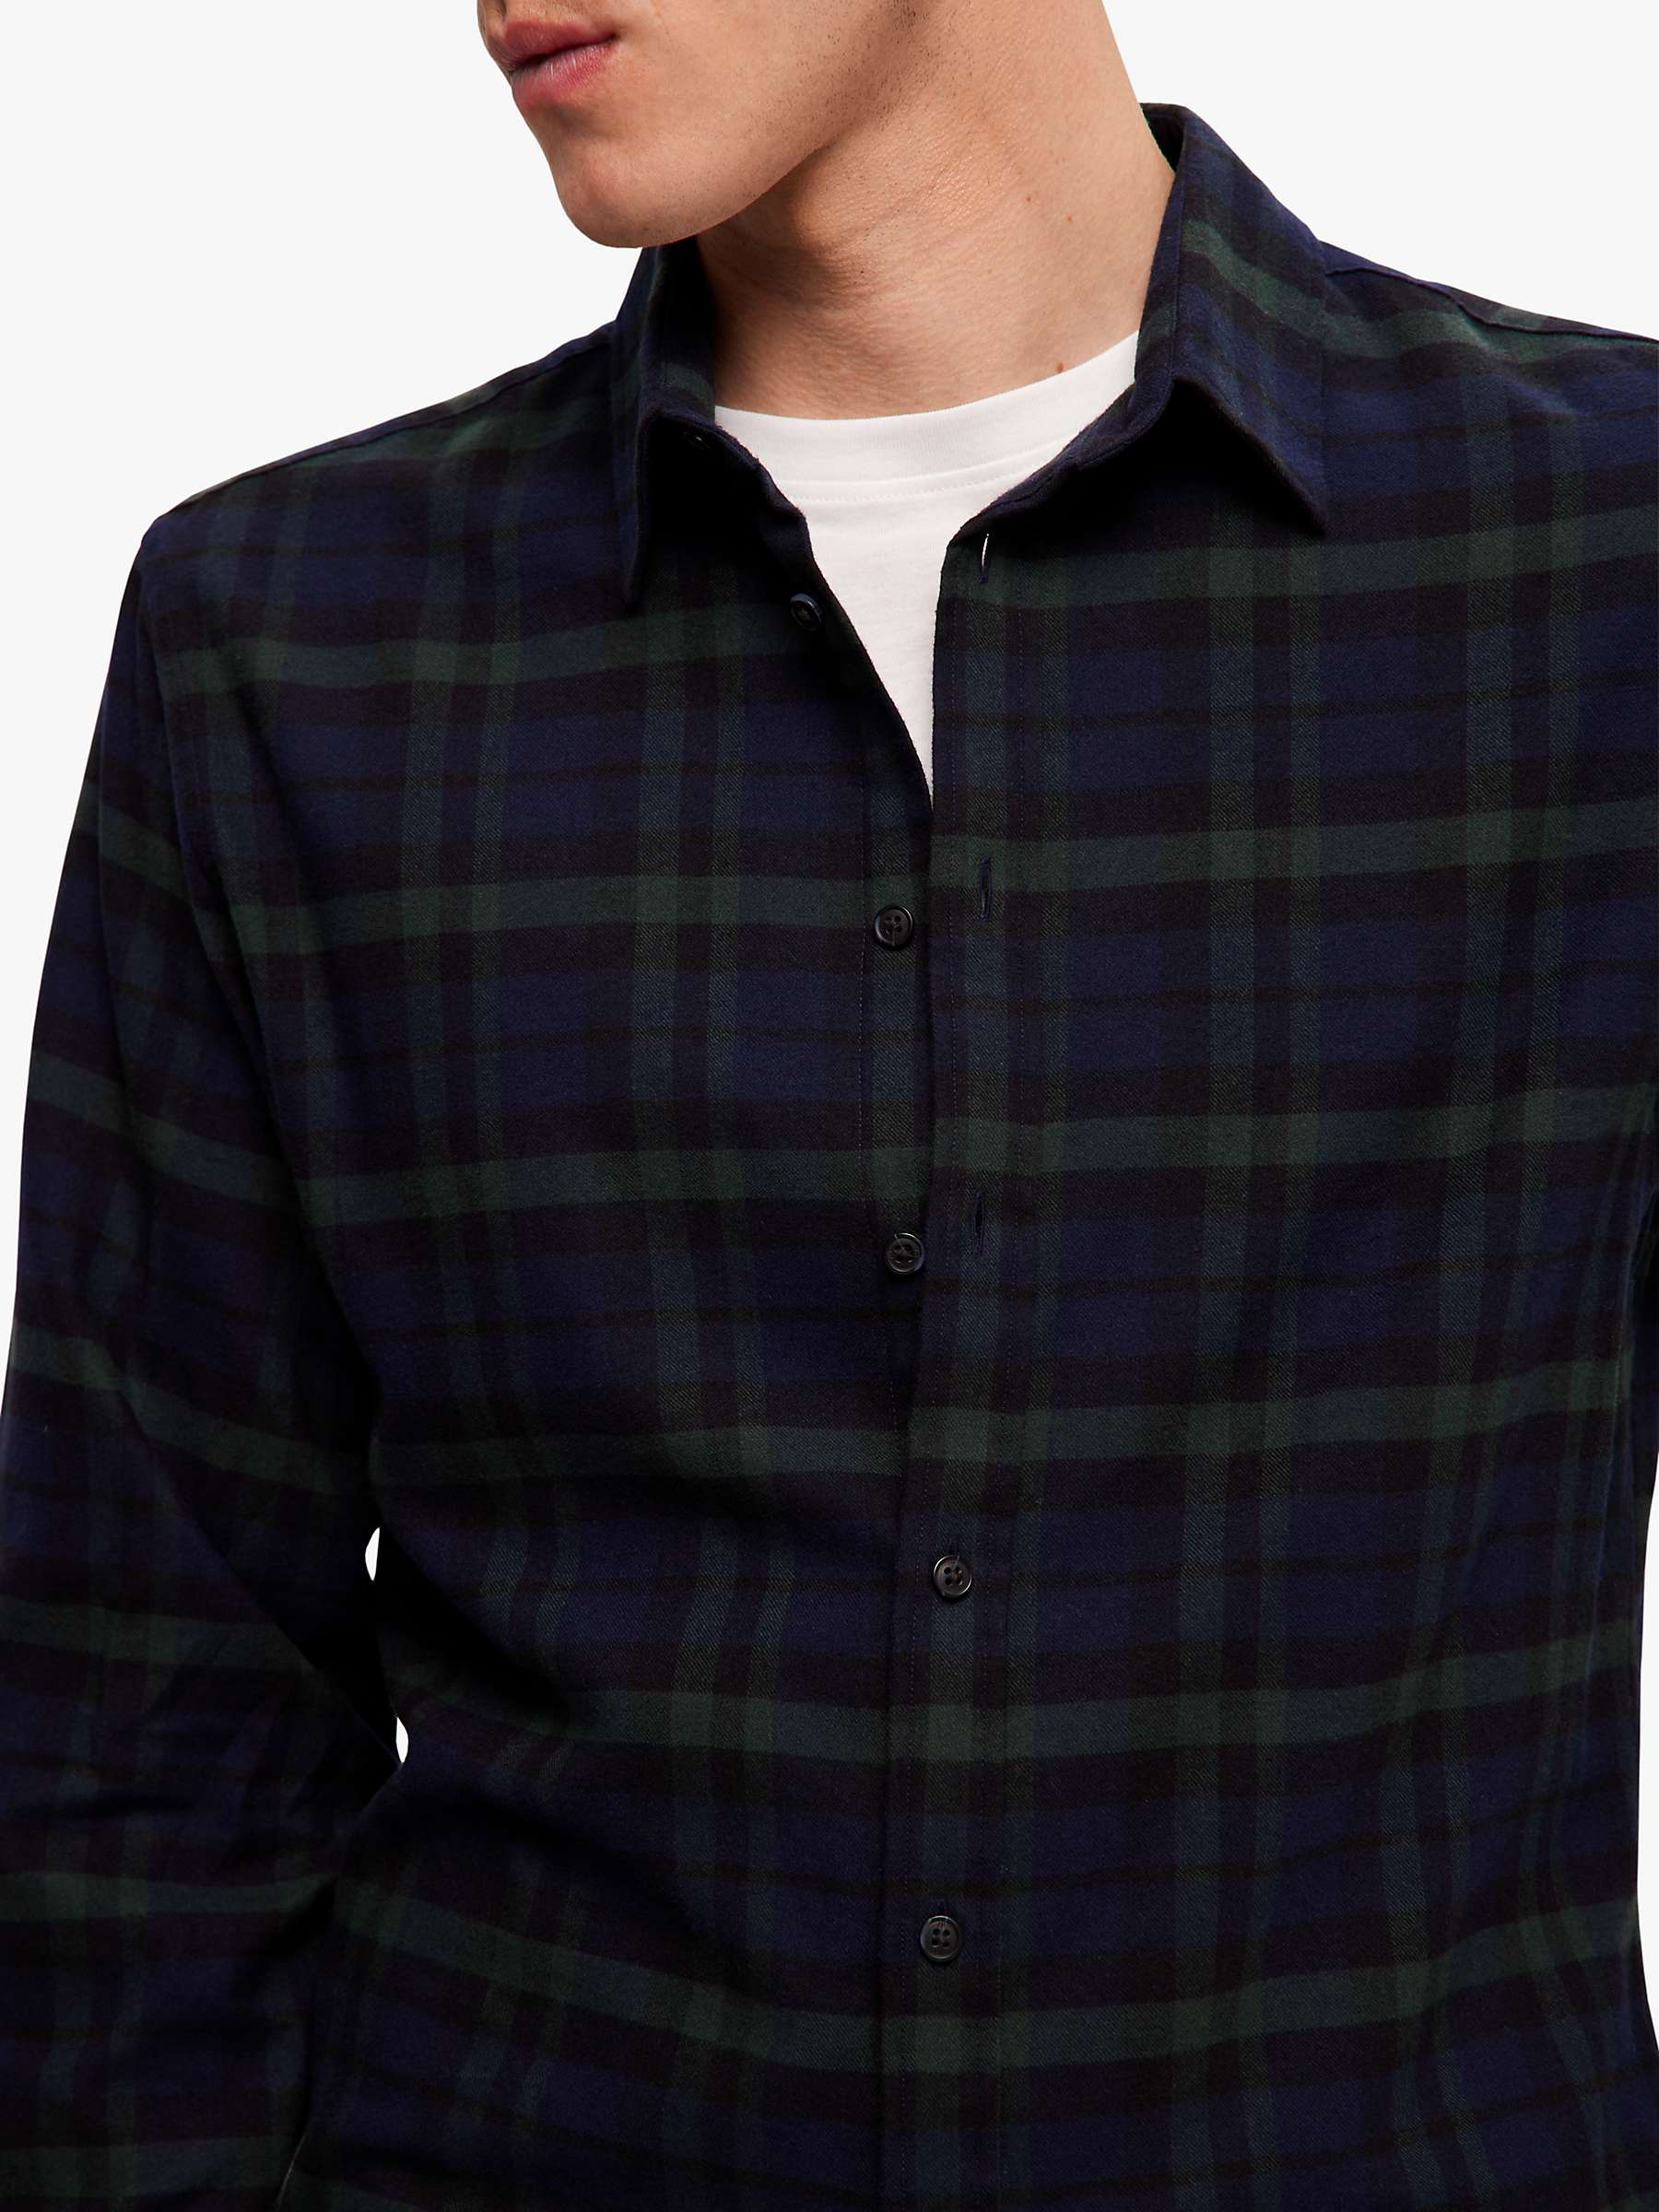 Buy SELECTED HOMME Flannel Shirt, Blue/Multi Online at johnlewis.com